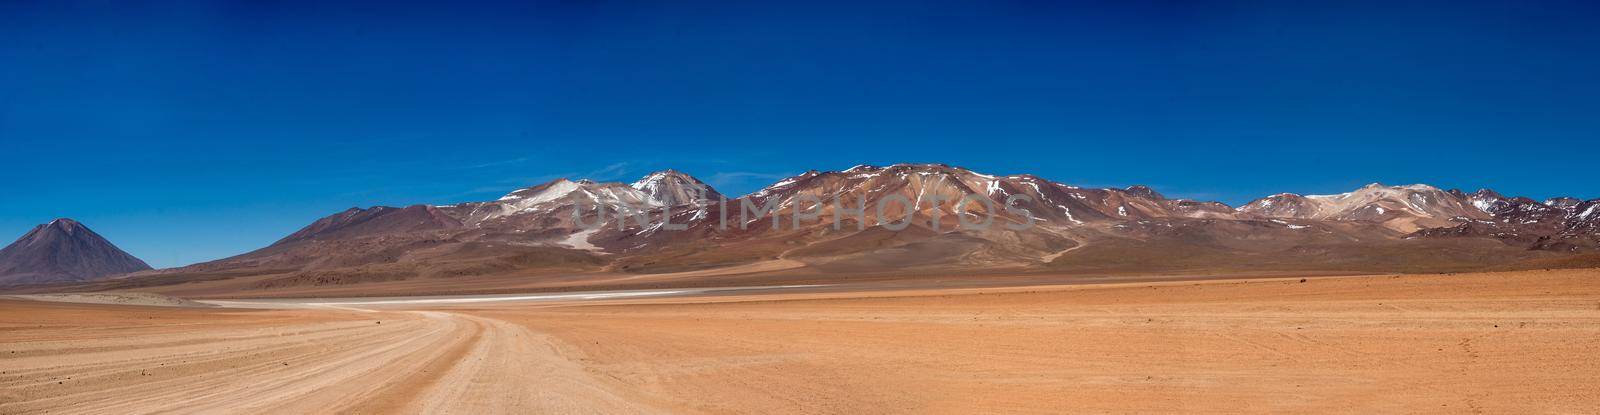 spacious Bolivian landscape by tan4ikk1